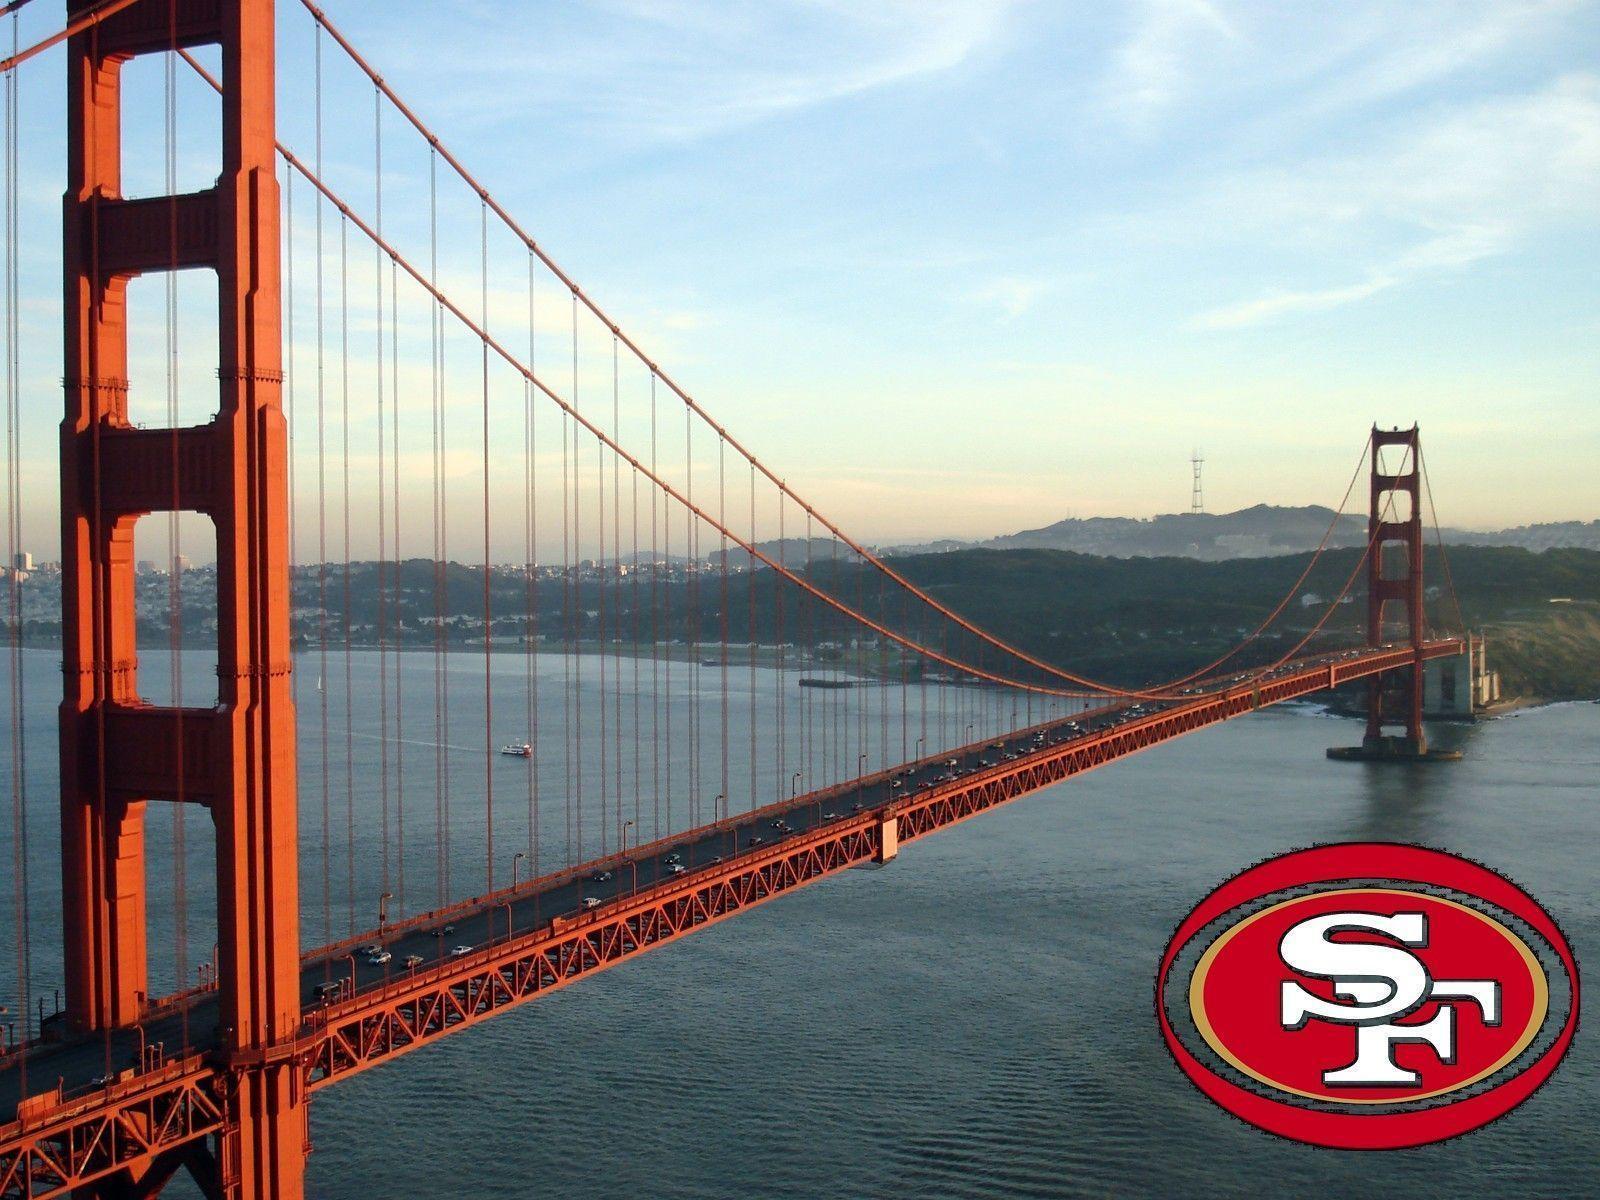 San Francisco 49ers / Nfl 1600x1200 Desktop Image polular